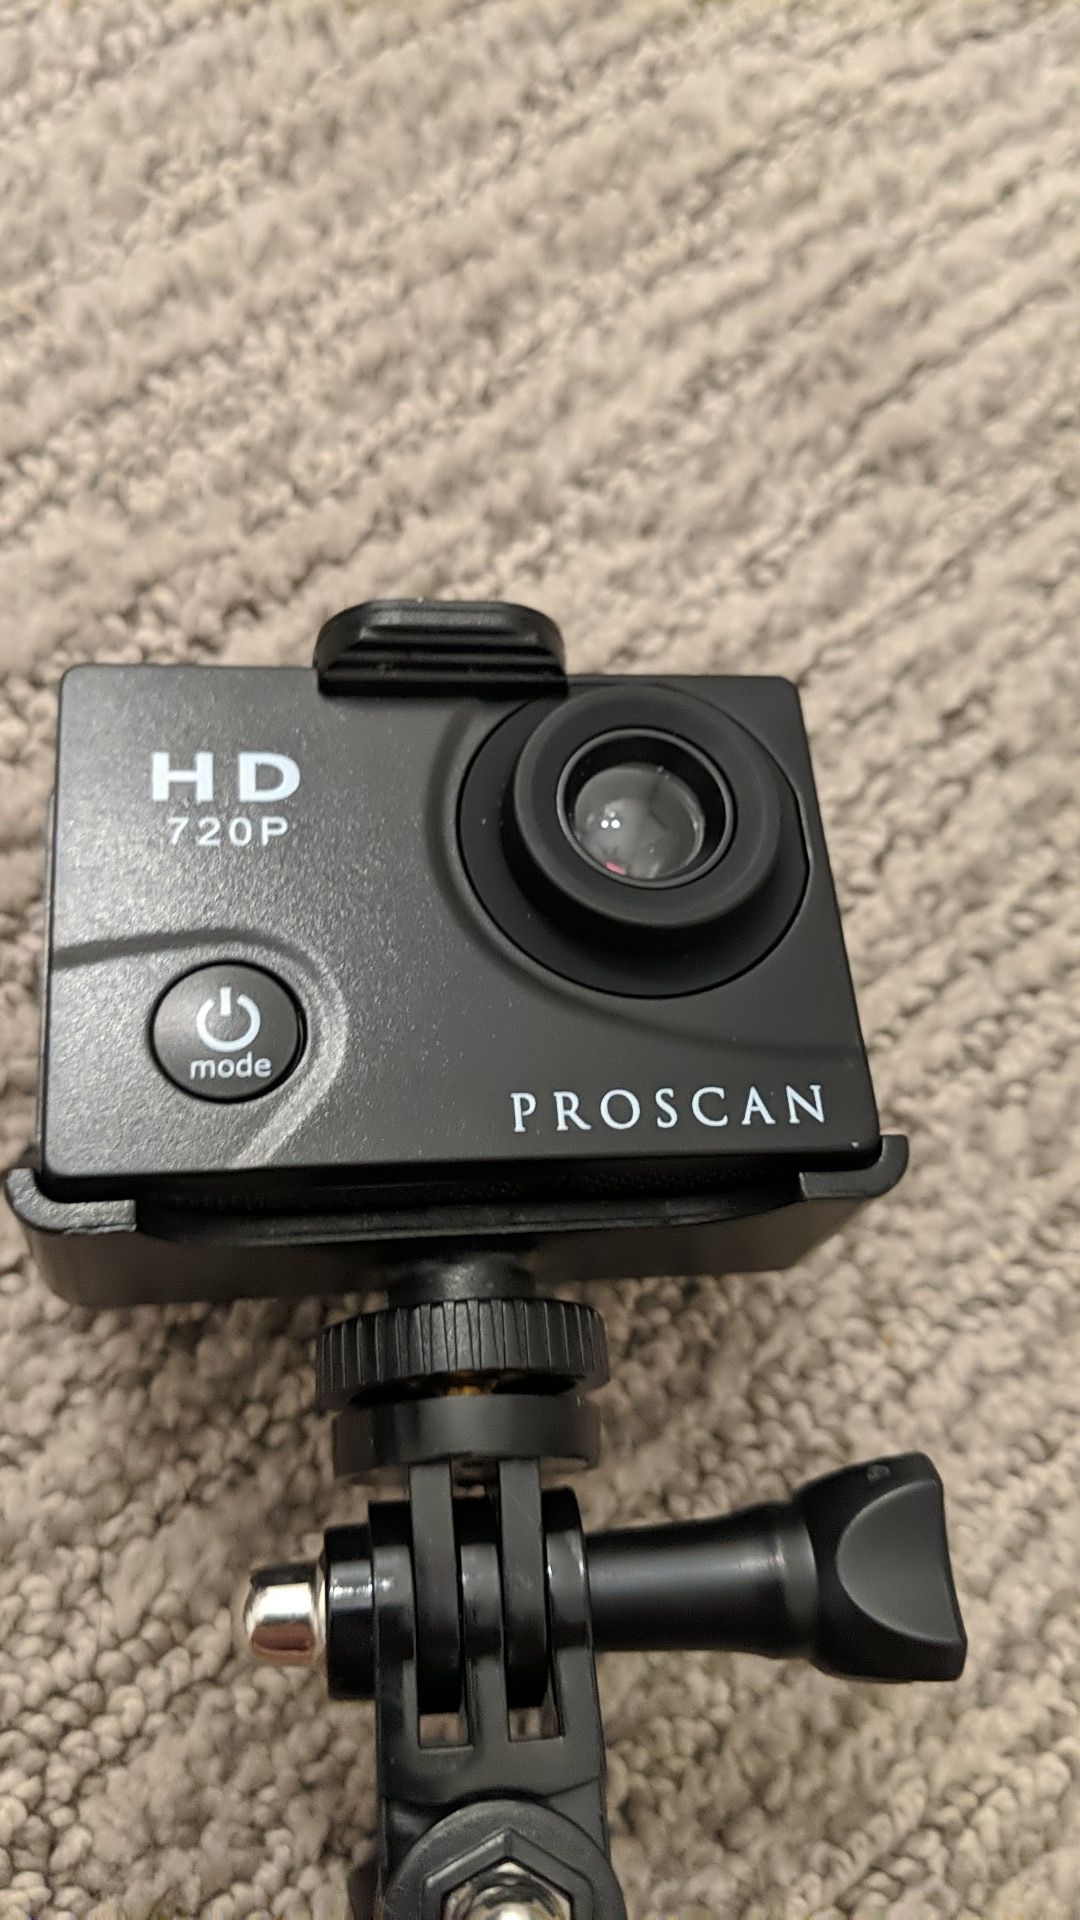 Black Proscan camera